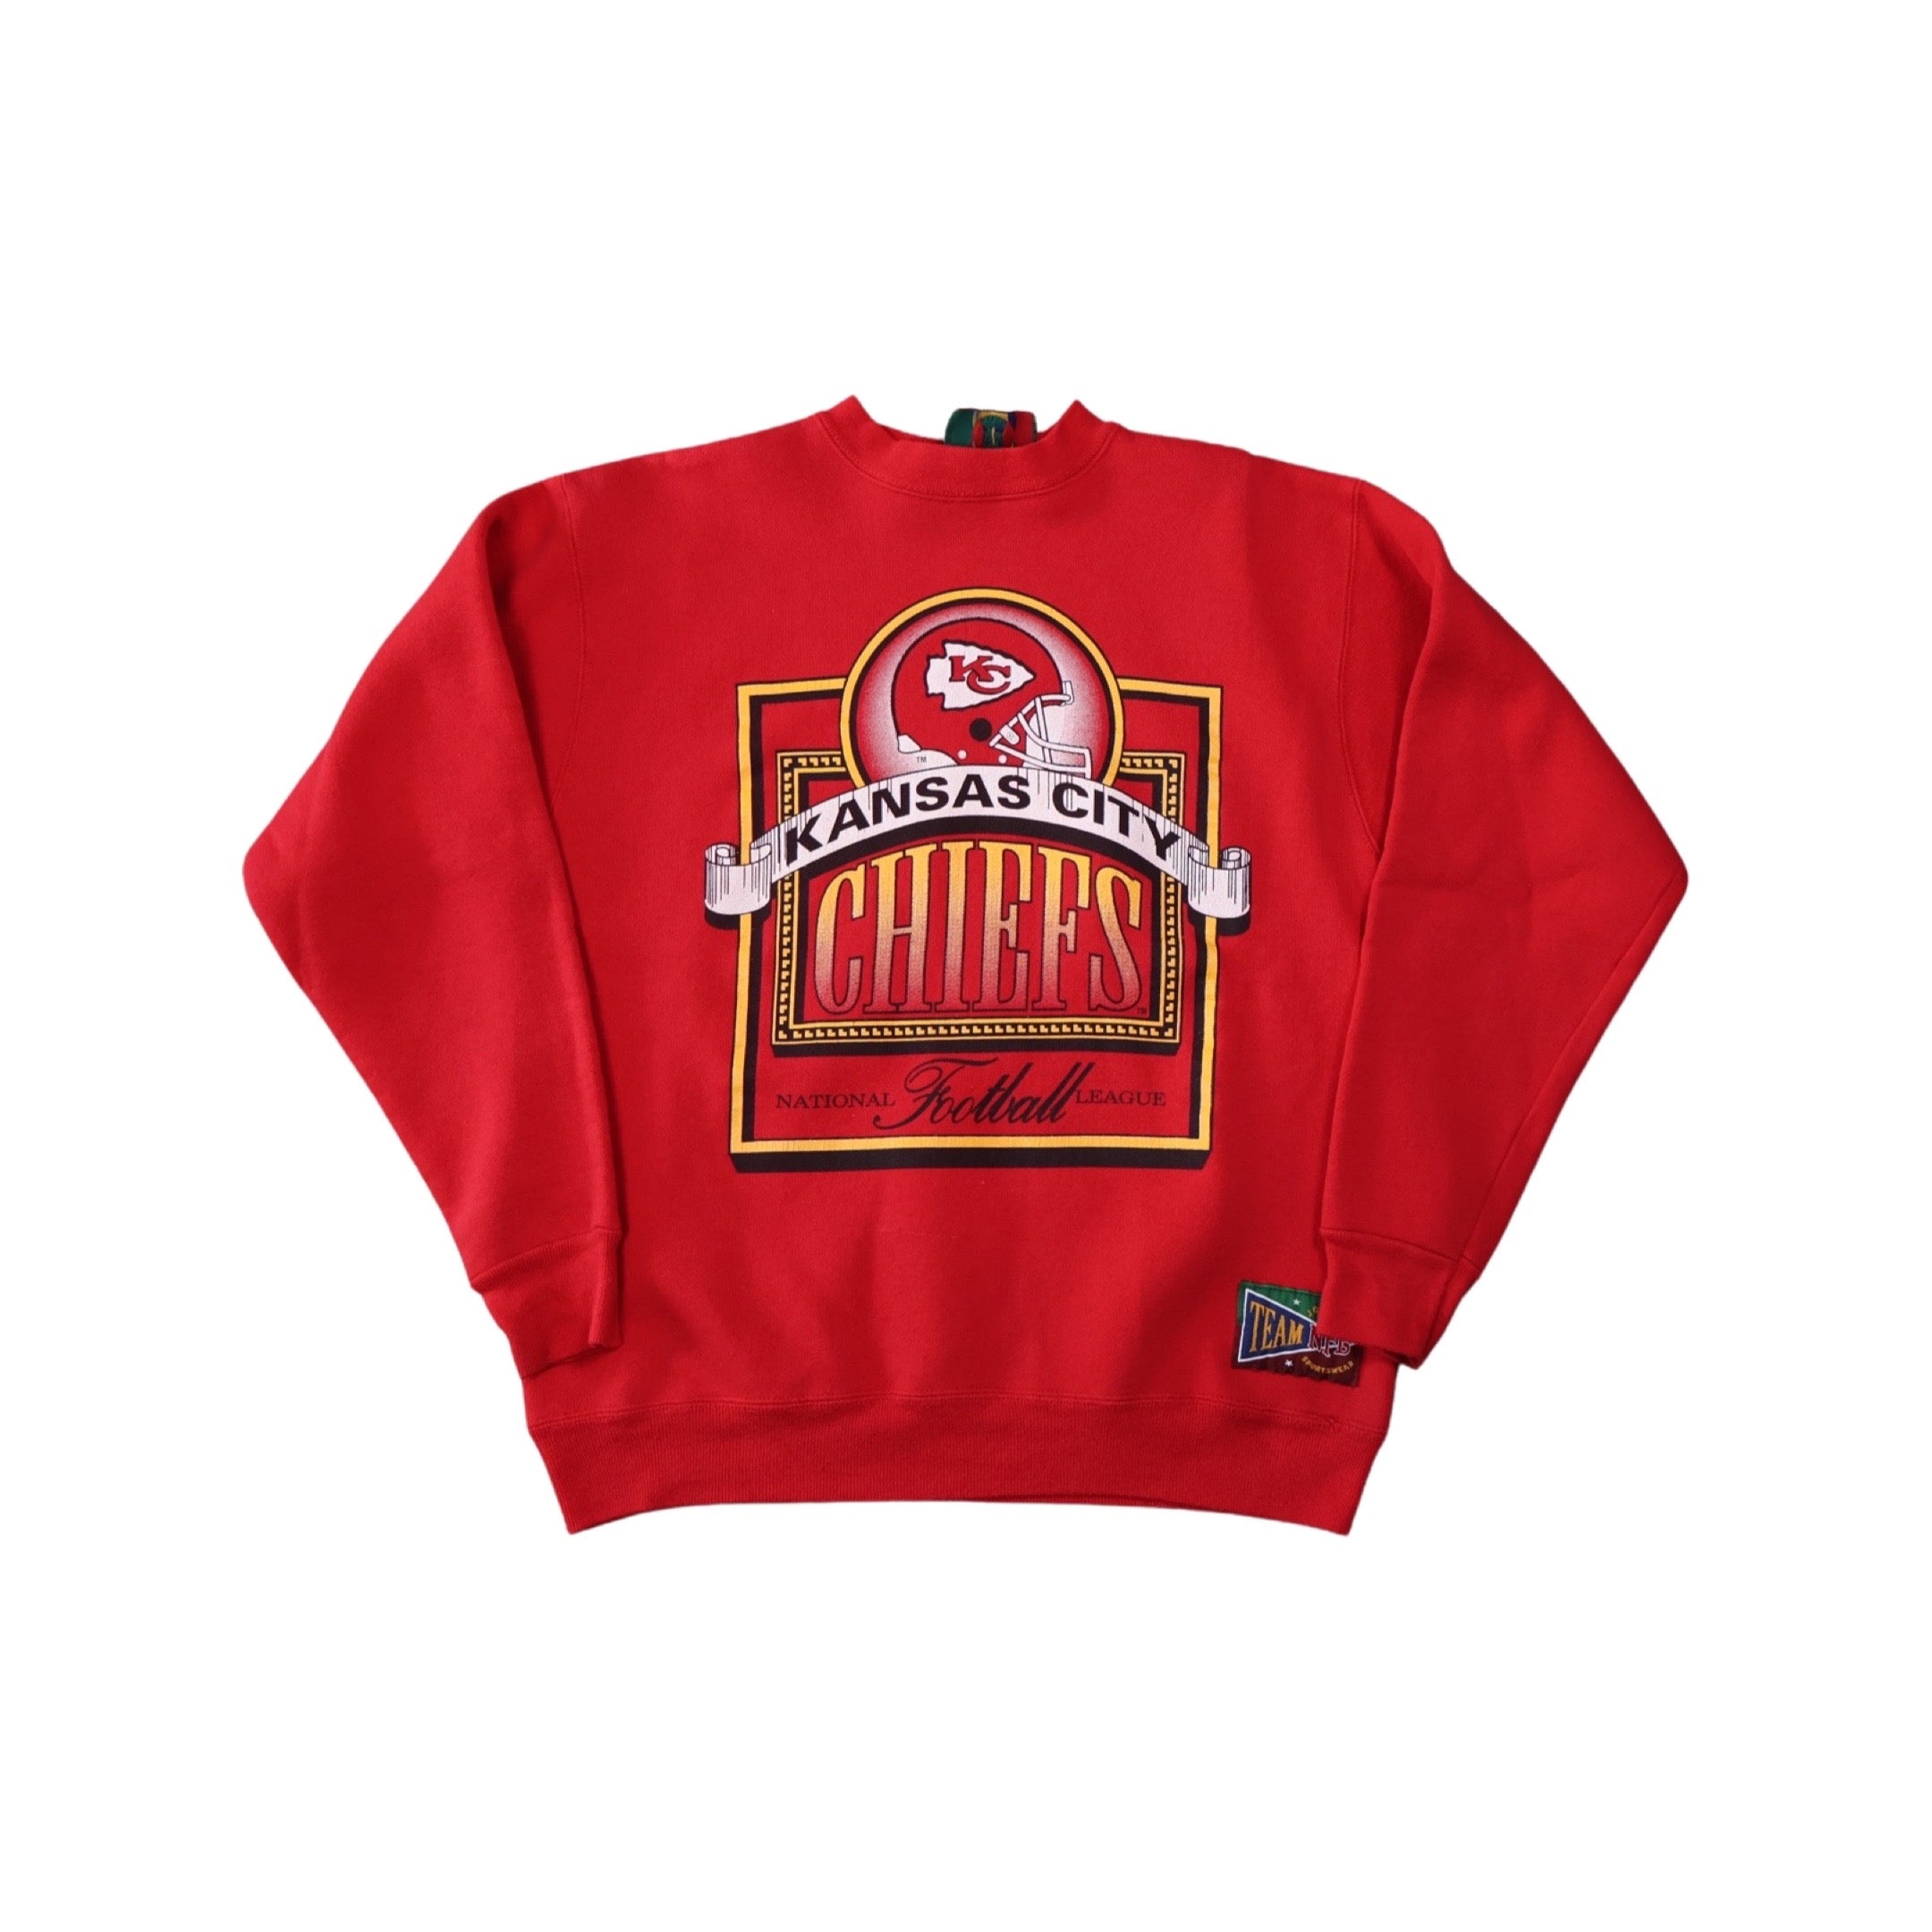 Kansas City Chiefs 90s Sweater (Medium)